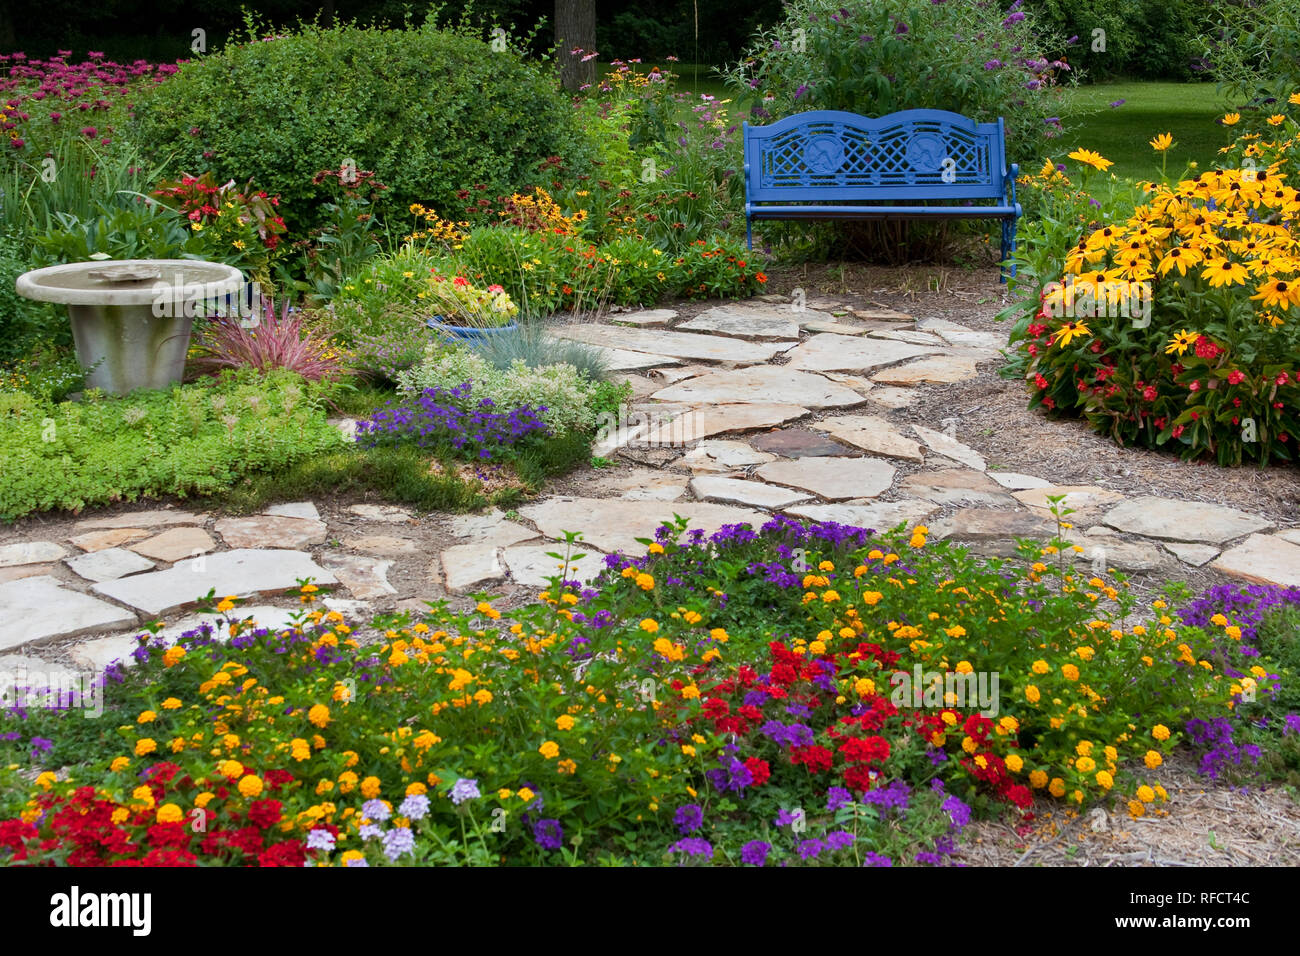 63821-21611 Blue bench, stone path & bird bath in flower garden.  Black-eyed Susans (Rudbeckia hirta)  Red Dragon Wing Begonias (Begonia x hybrida) Ho Stock Photo